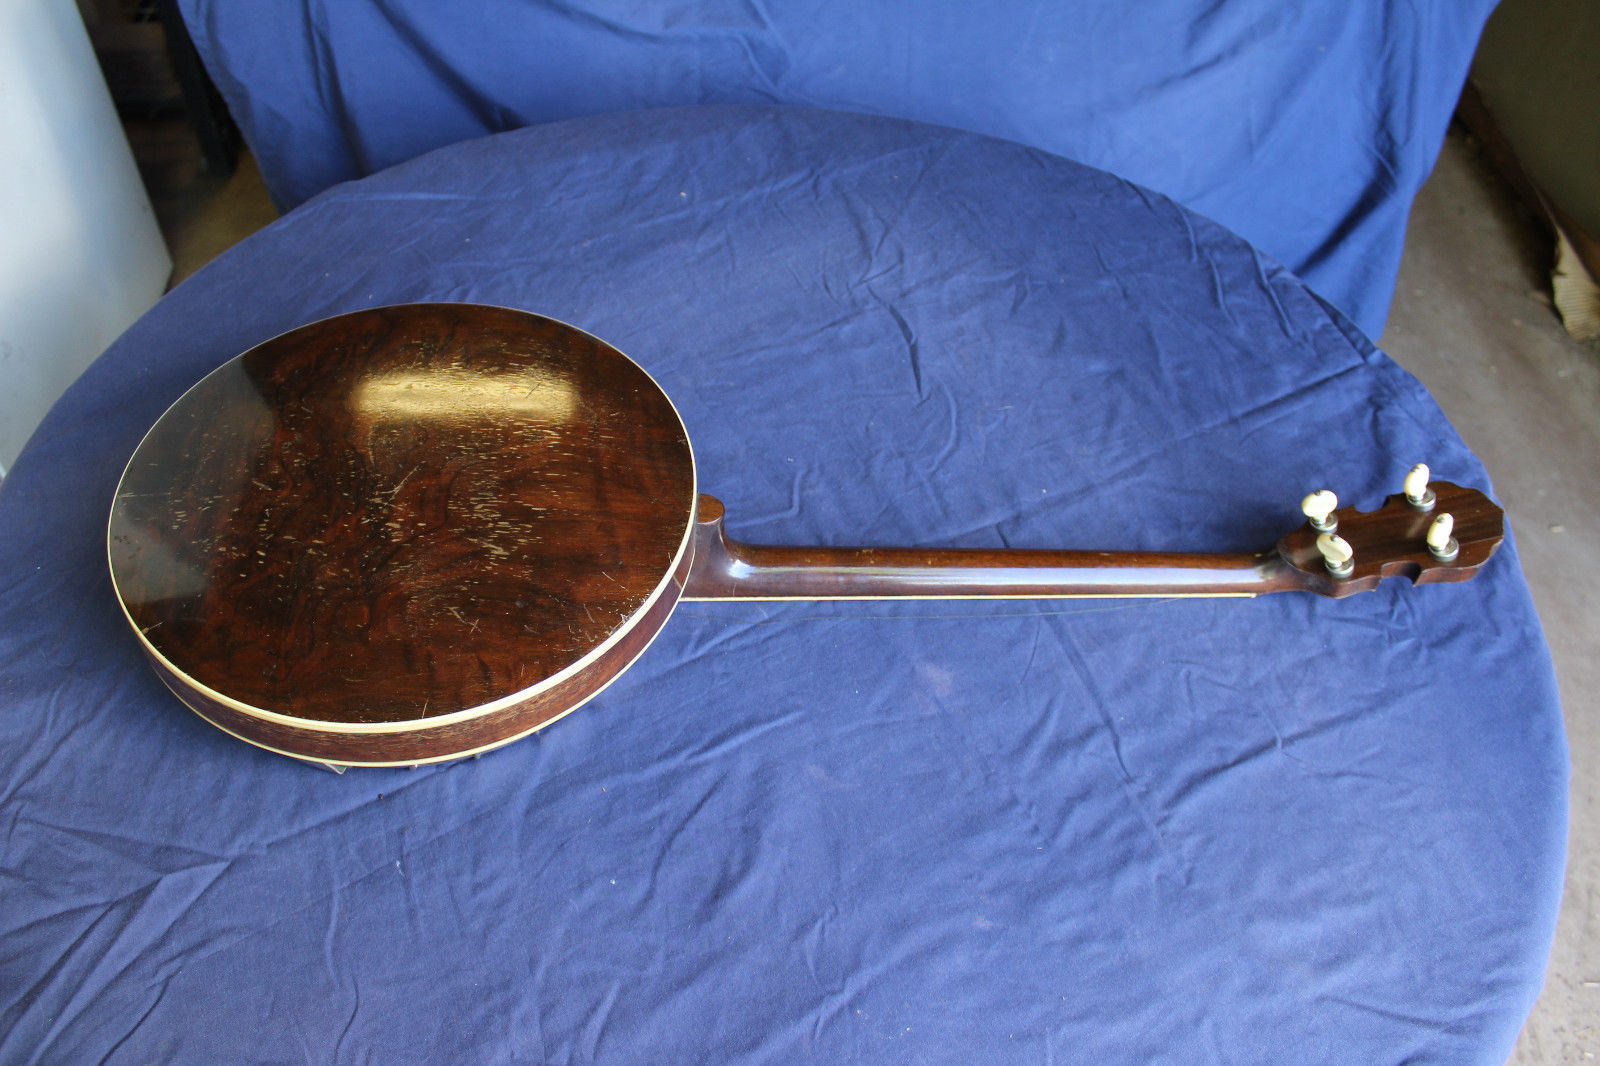 banjo Gibson 1920's